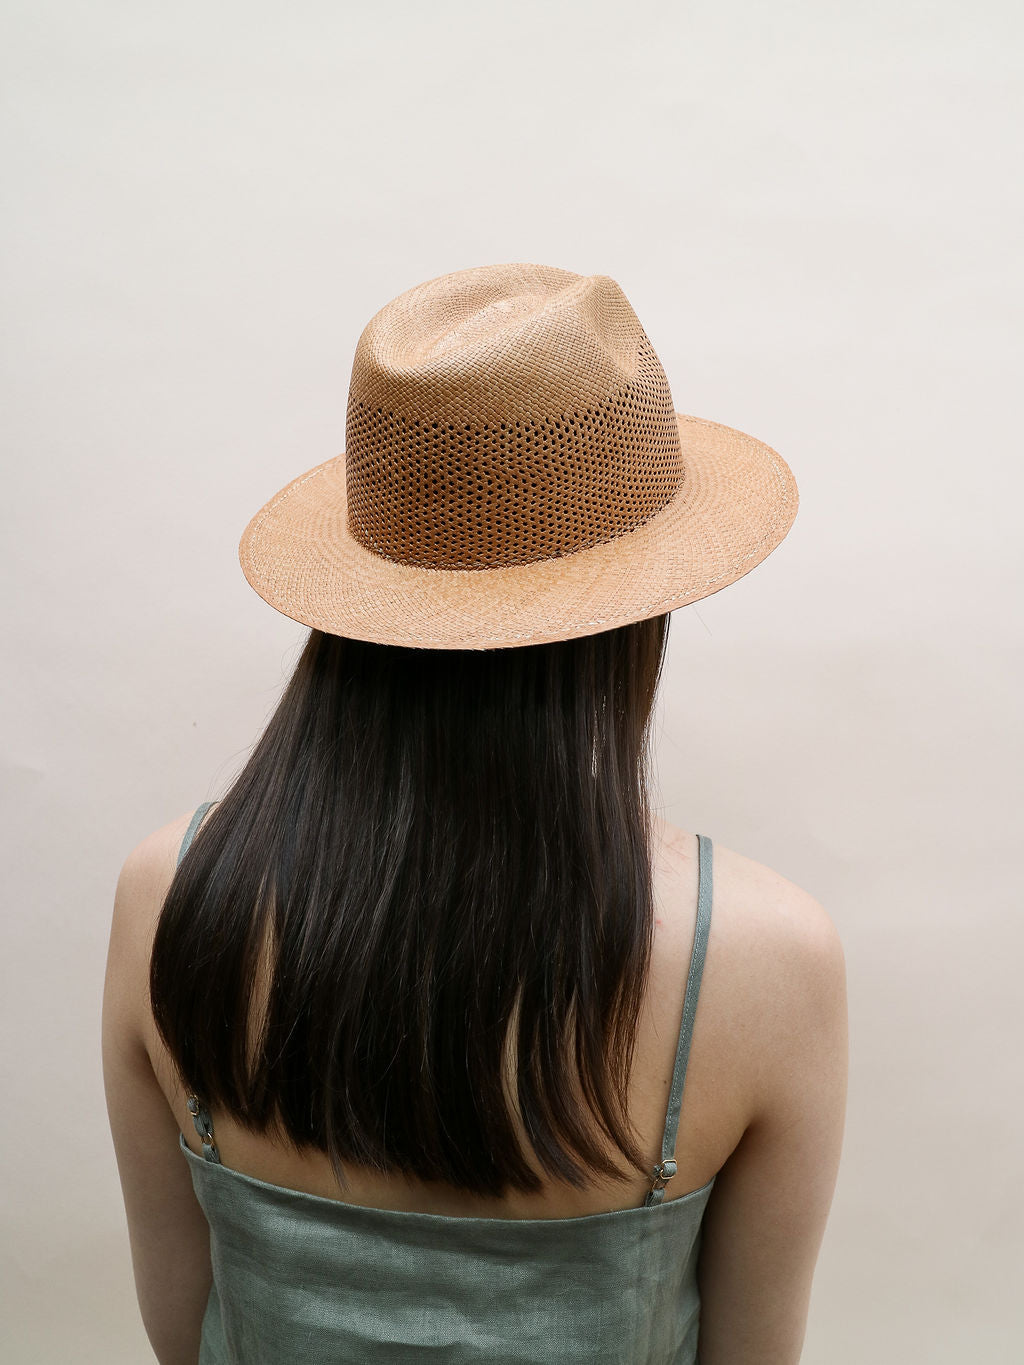 best quality panama hats melbourne